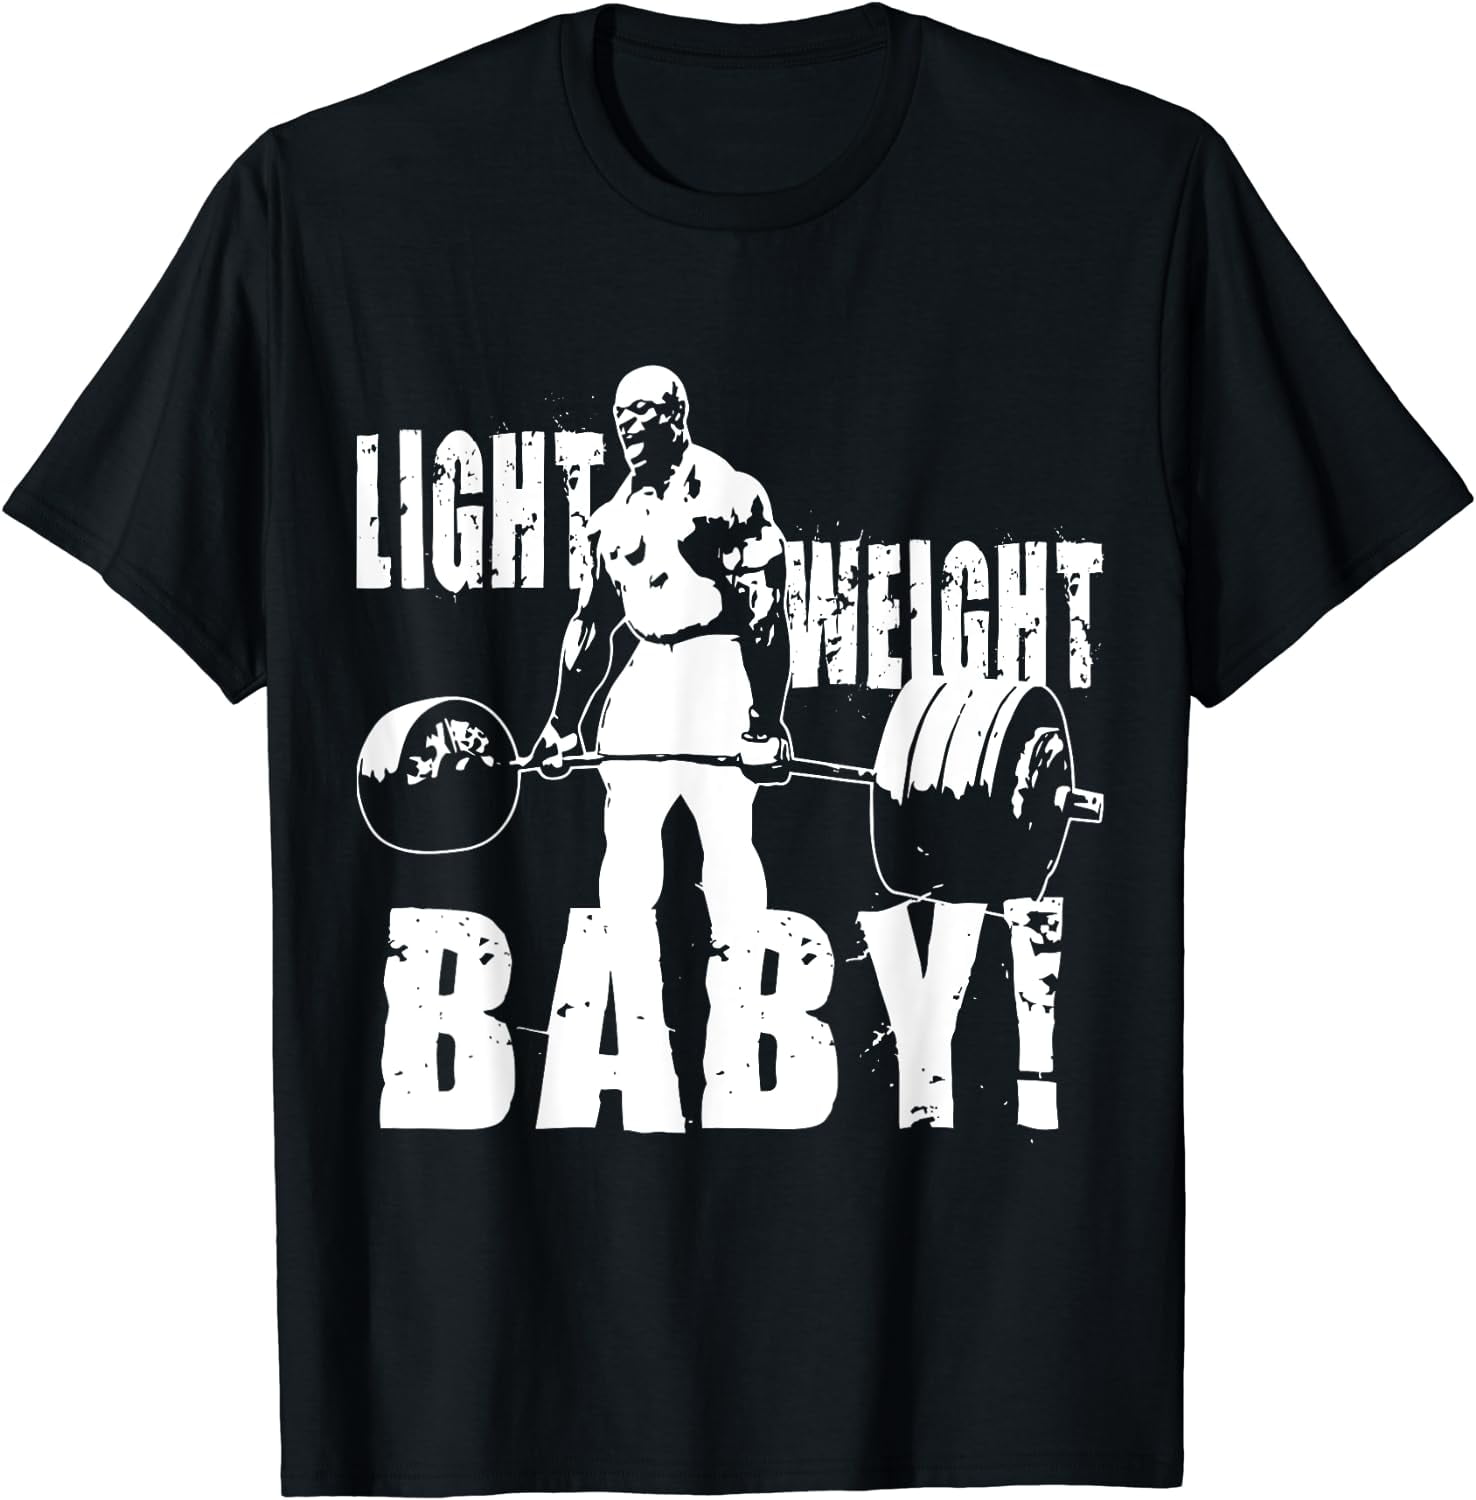 BODYBUILDING MOTIVATION - LIGHT WEIGHT BABY 